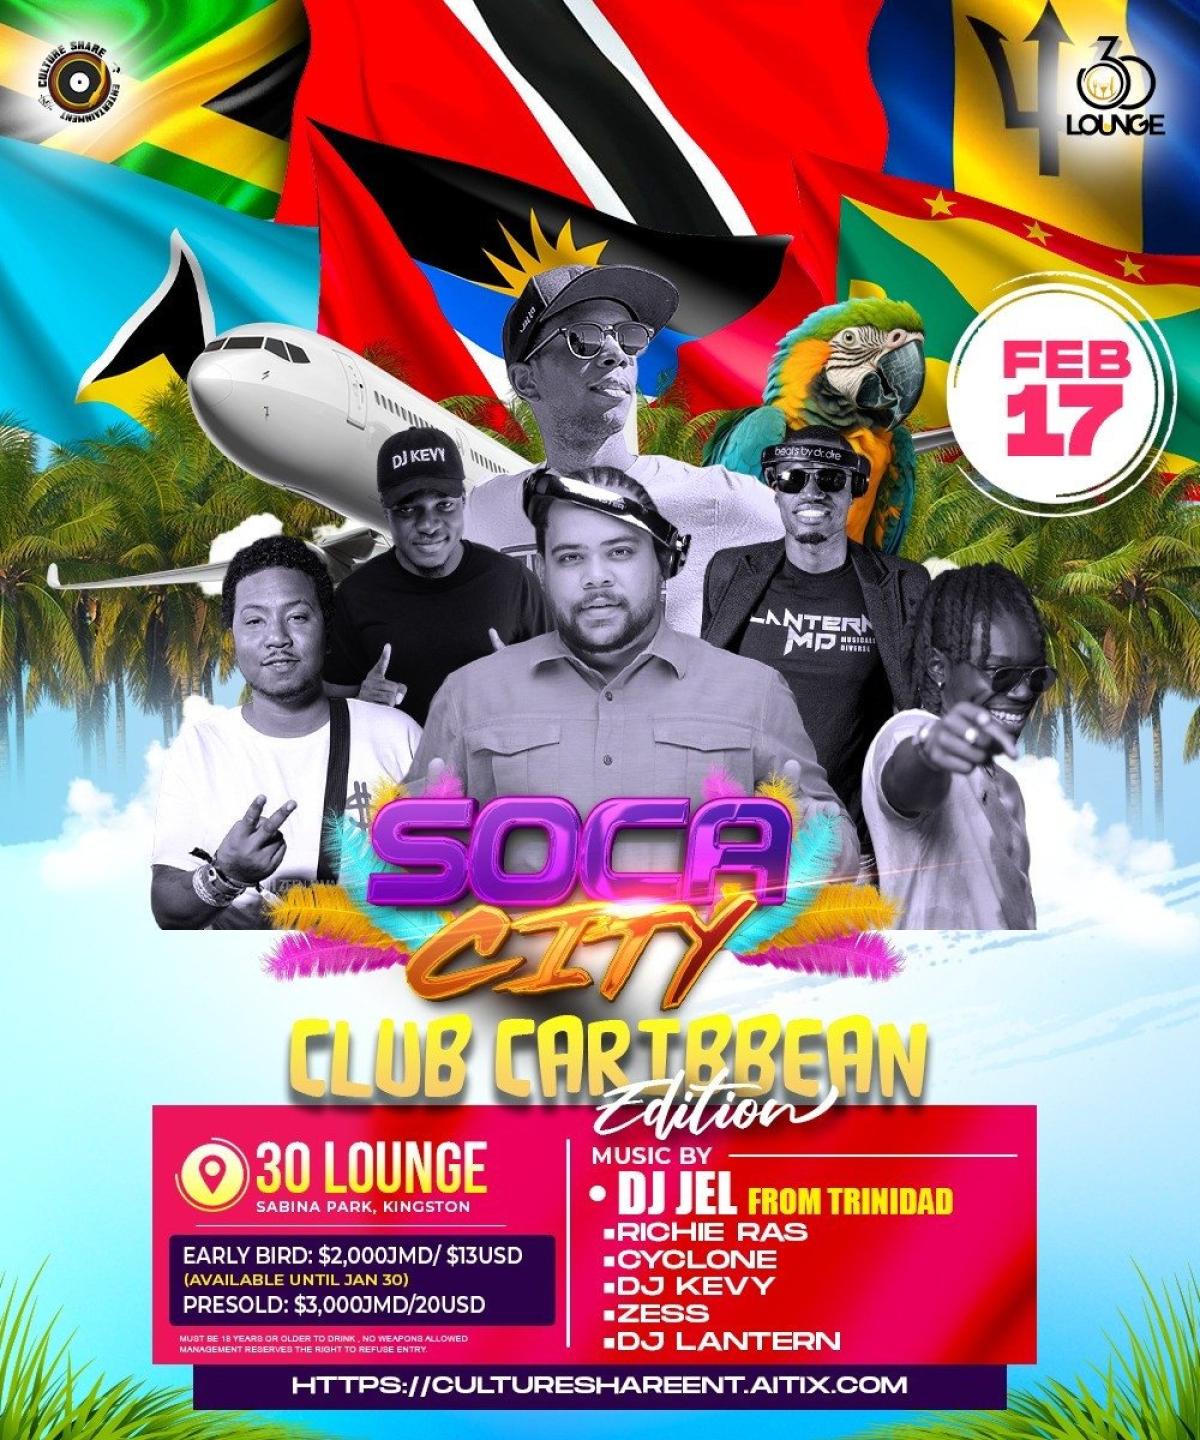 Soca City "Club Caribbean Edition" flyer or graphic.